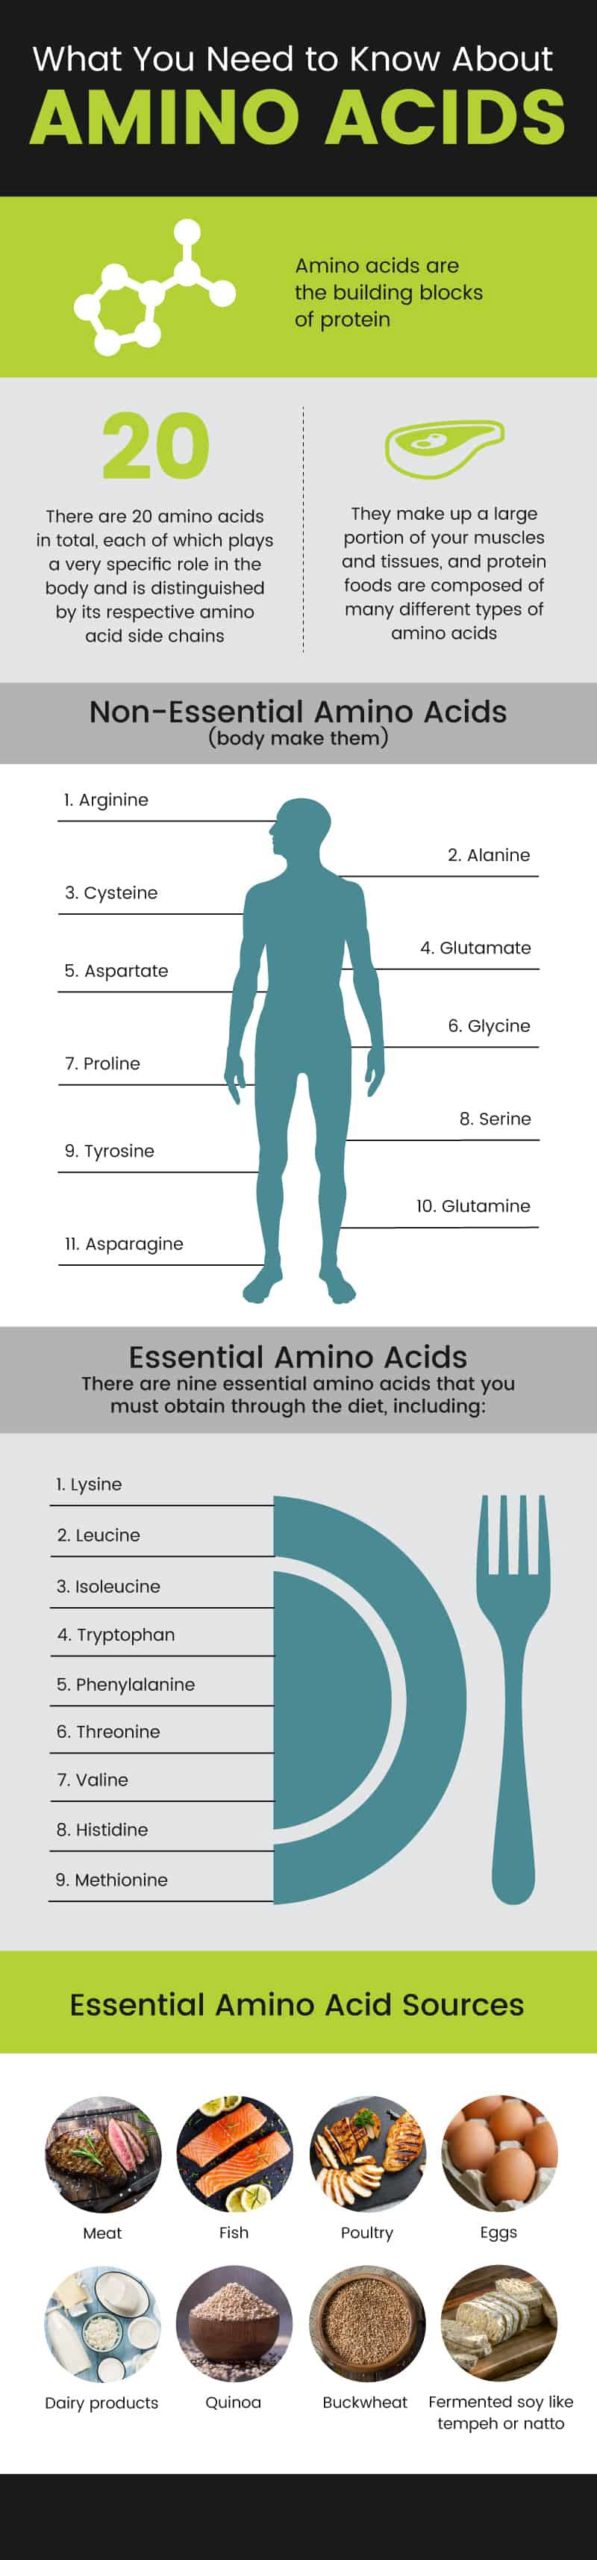 Essential amino acids - MKexpress.net